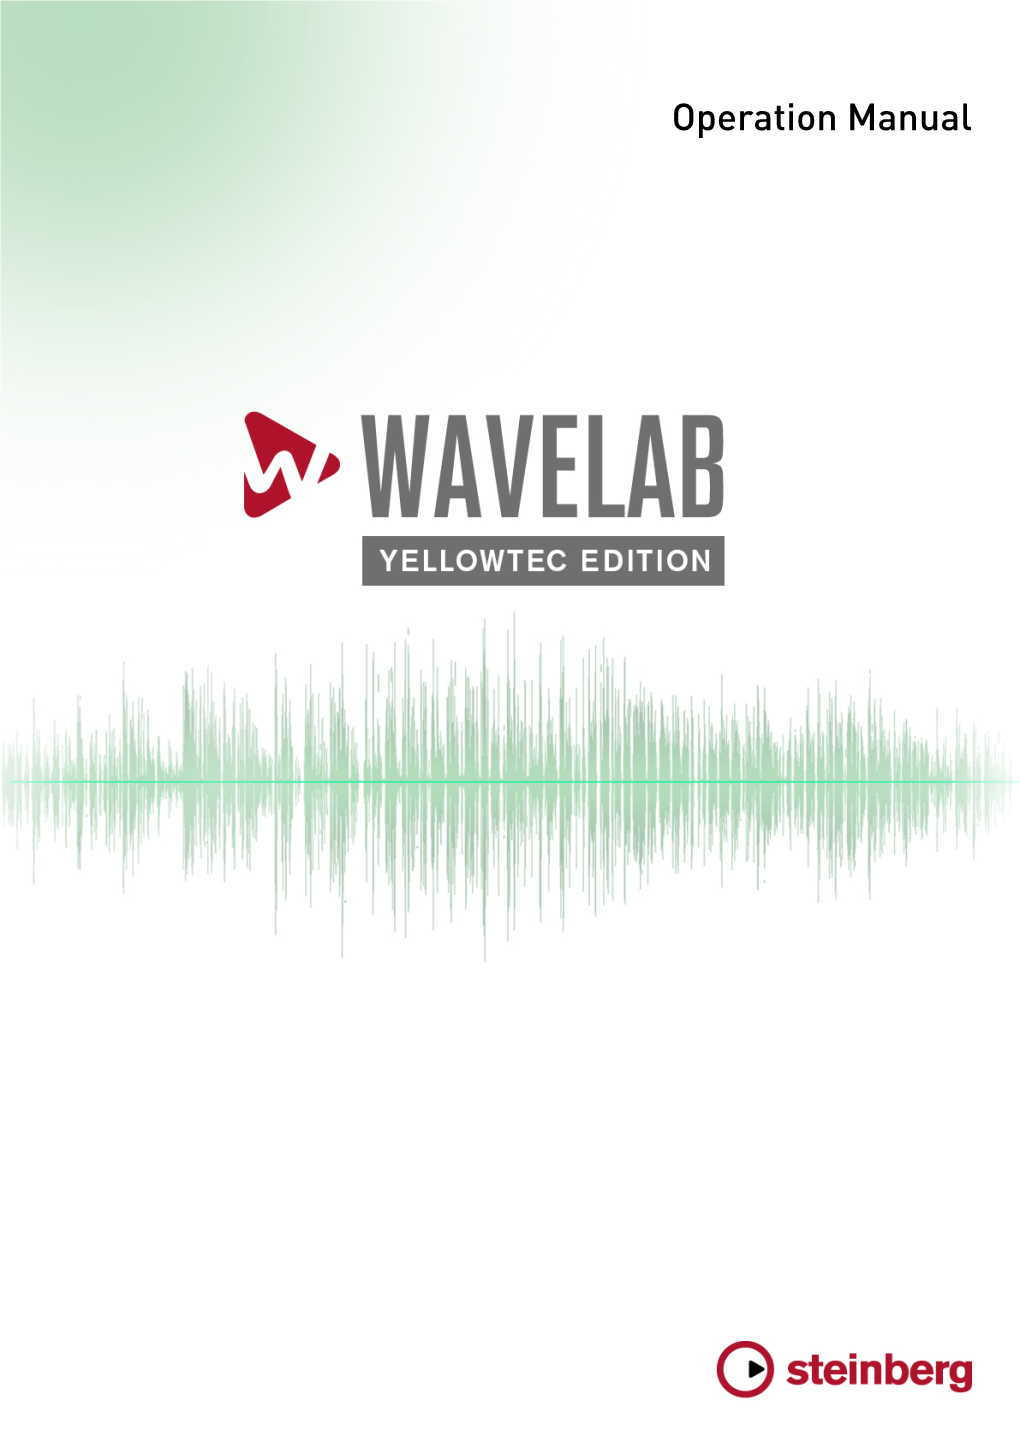 Wavelab Yellowtec Edition Operation Manual